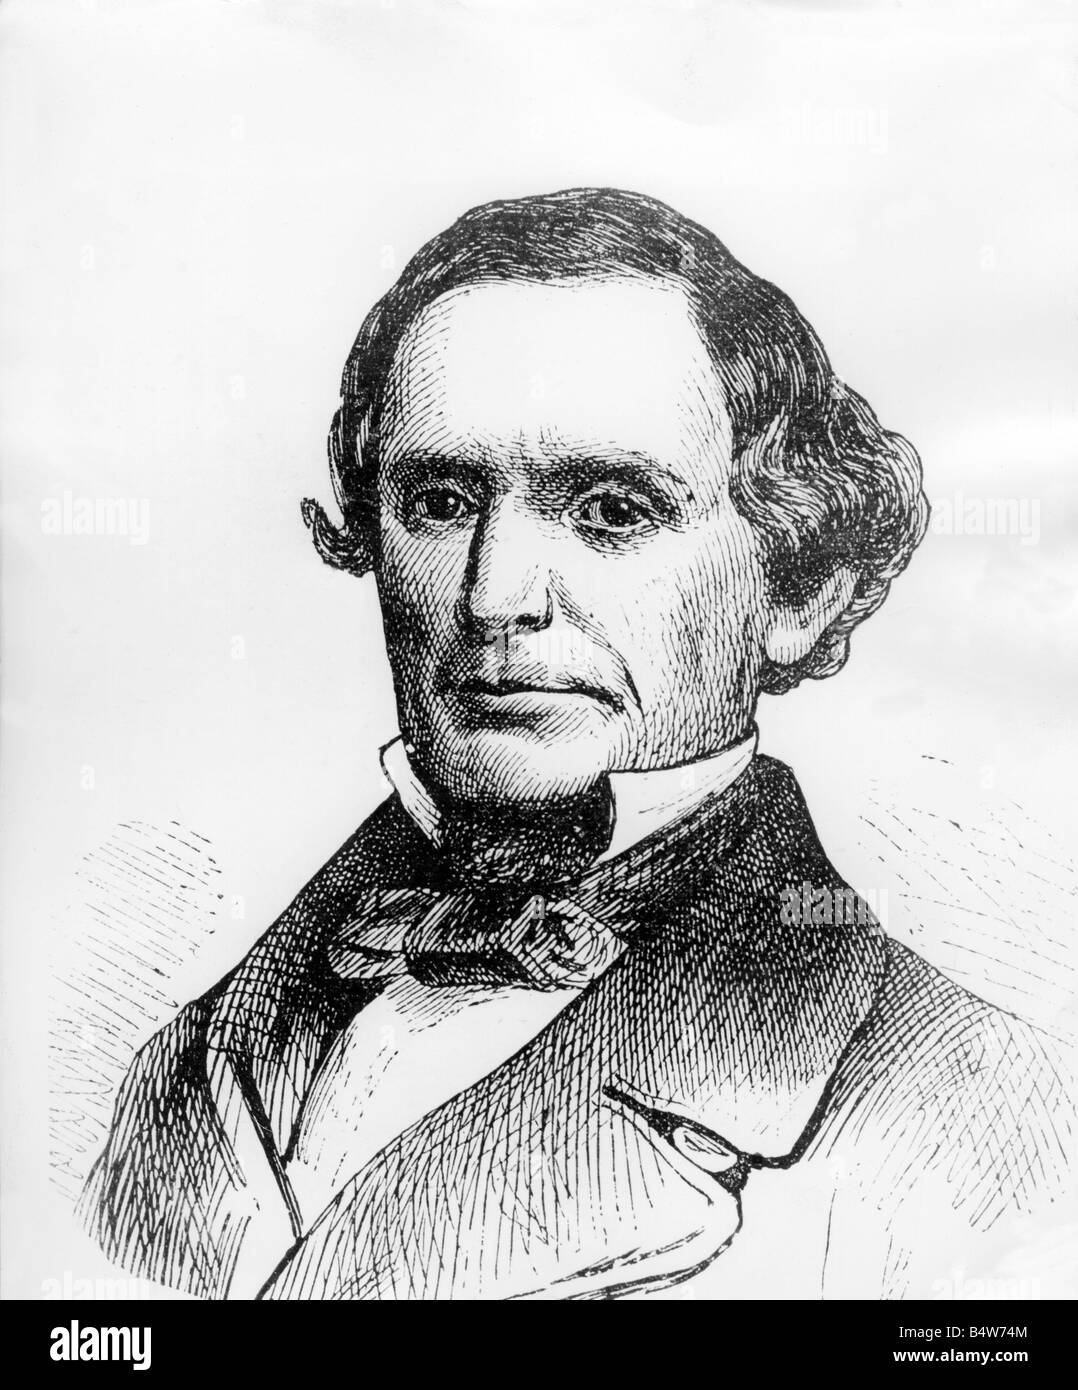 Davis, Jefferson Finis, 3.6.1808 - 9.12.1889, American politician (Dem.), President of the Confederate States of Amerikc (CSA) 18.2.1861 - 5.5.1865, portrait, wood engraving, 19th century, , Stock Photo